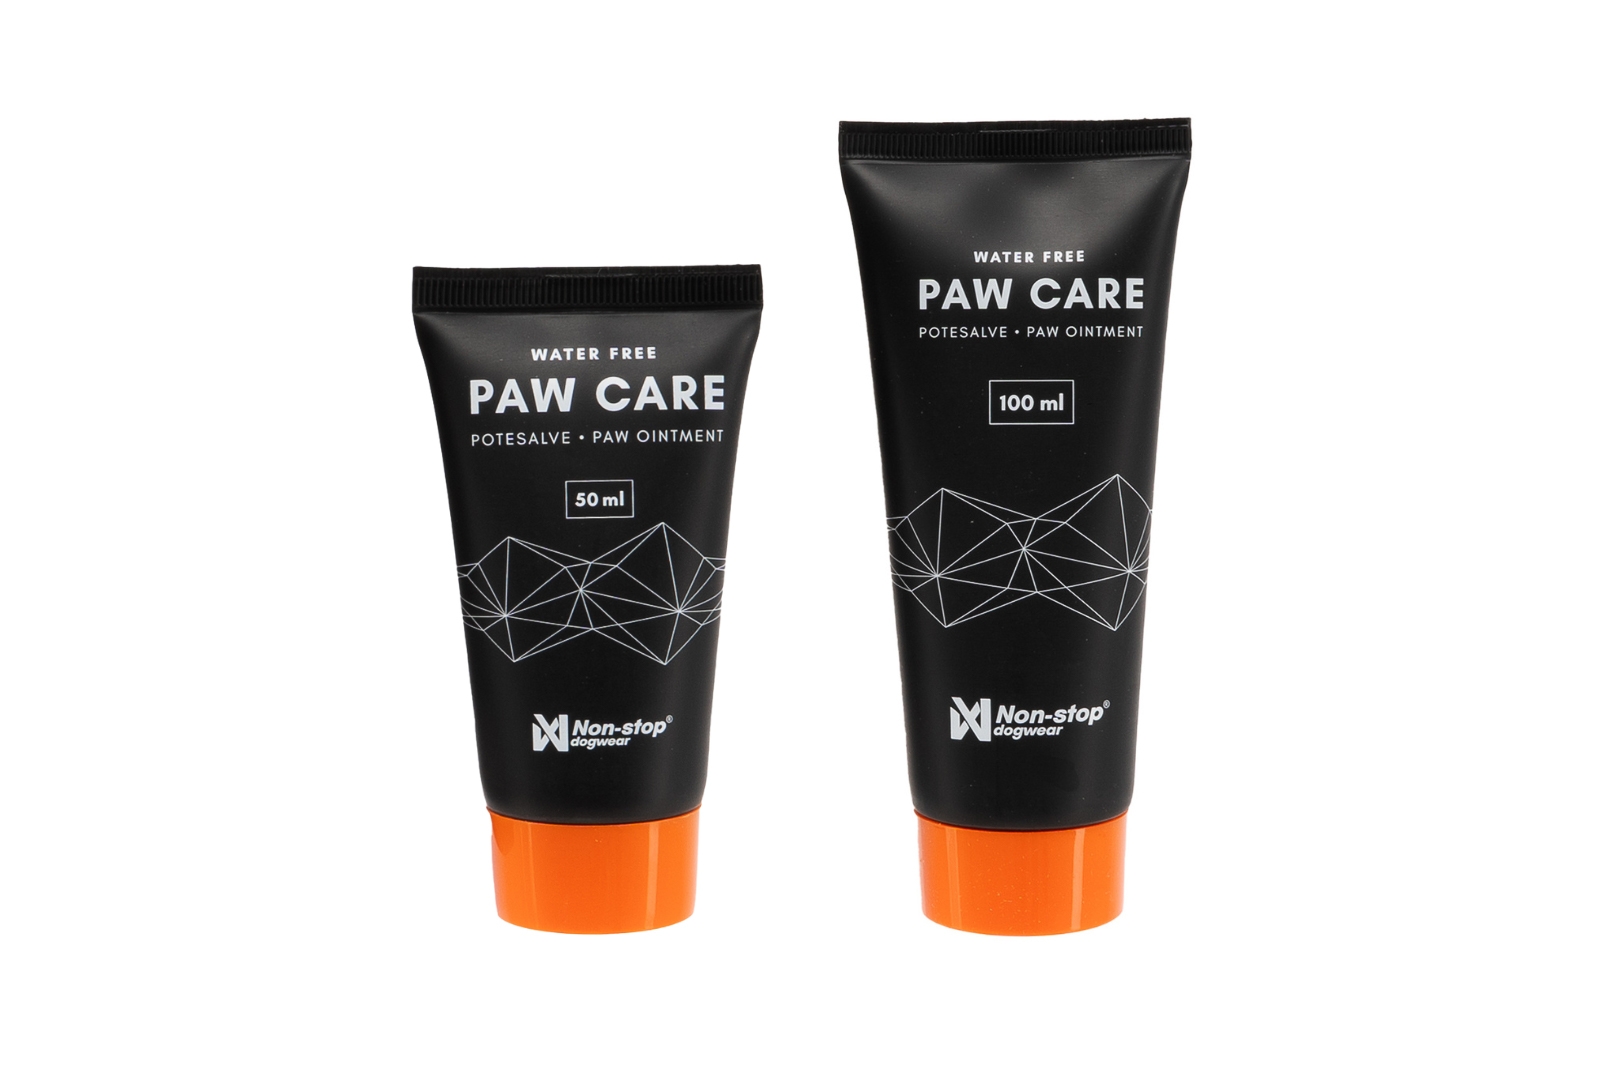 Paw care